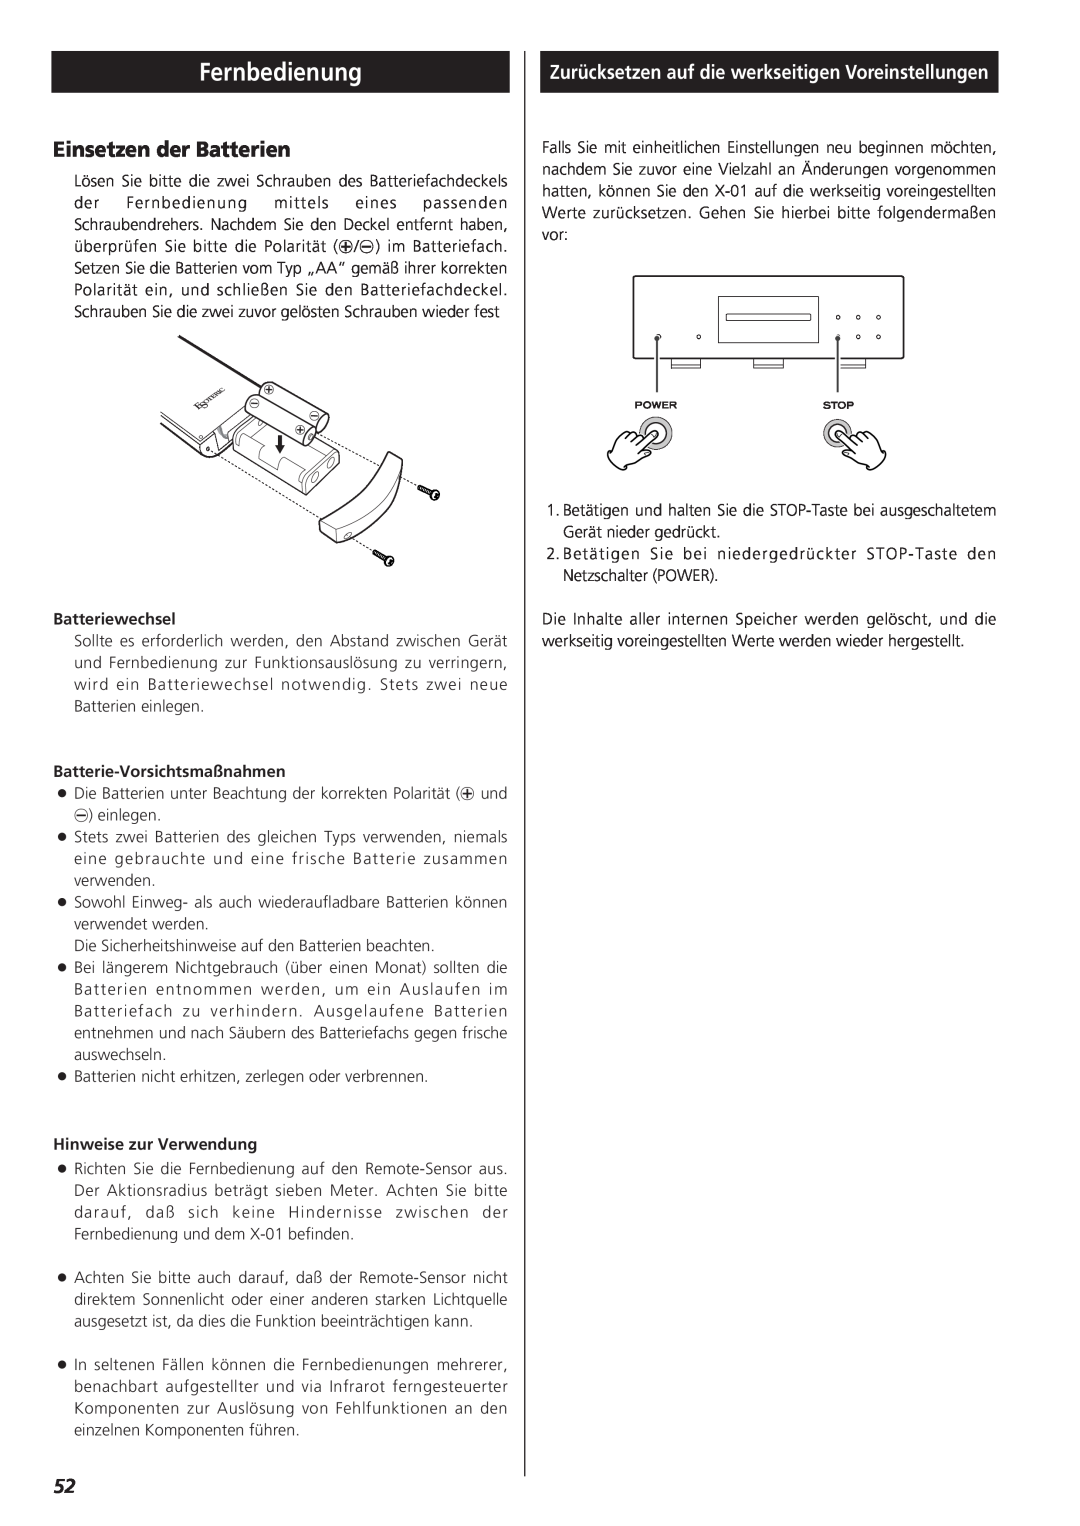 Esoteric D00816700B manual Fernbedienung, Einsetzen der Batterien, Batteriewechsel, Batterie-Vorsichtsmaßnahmen 